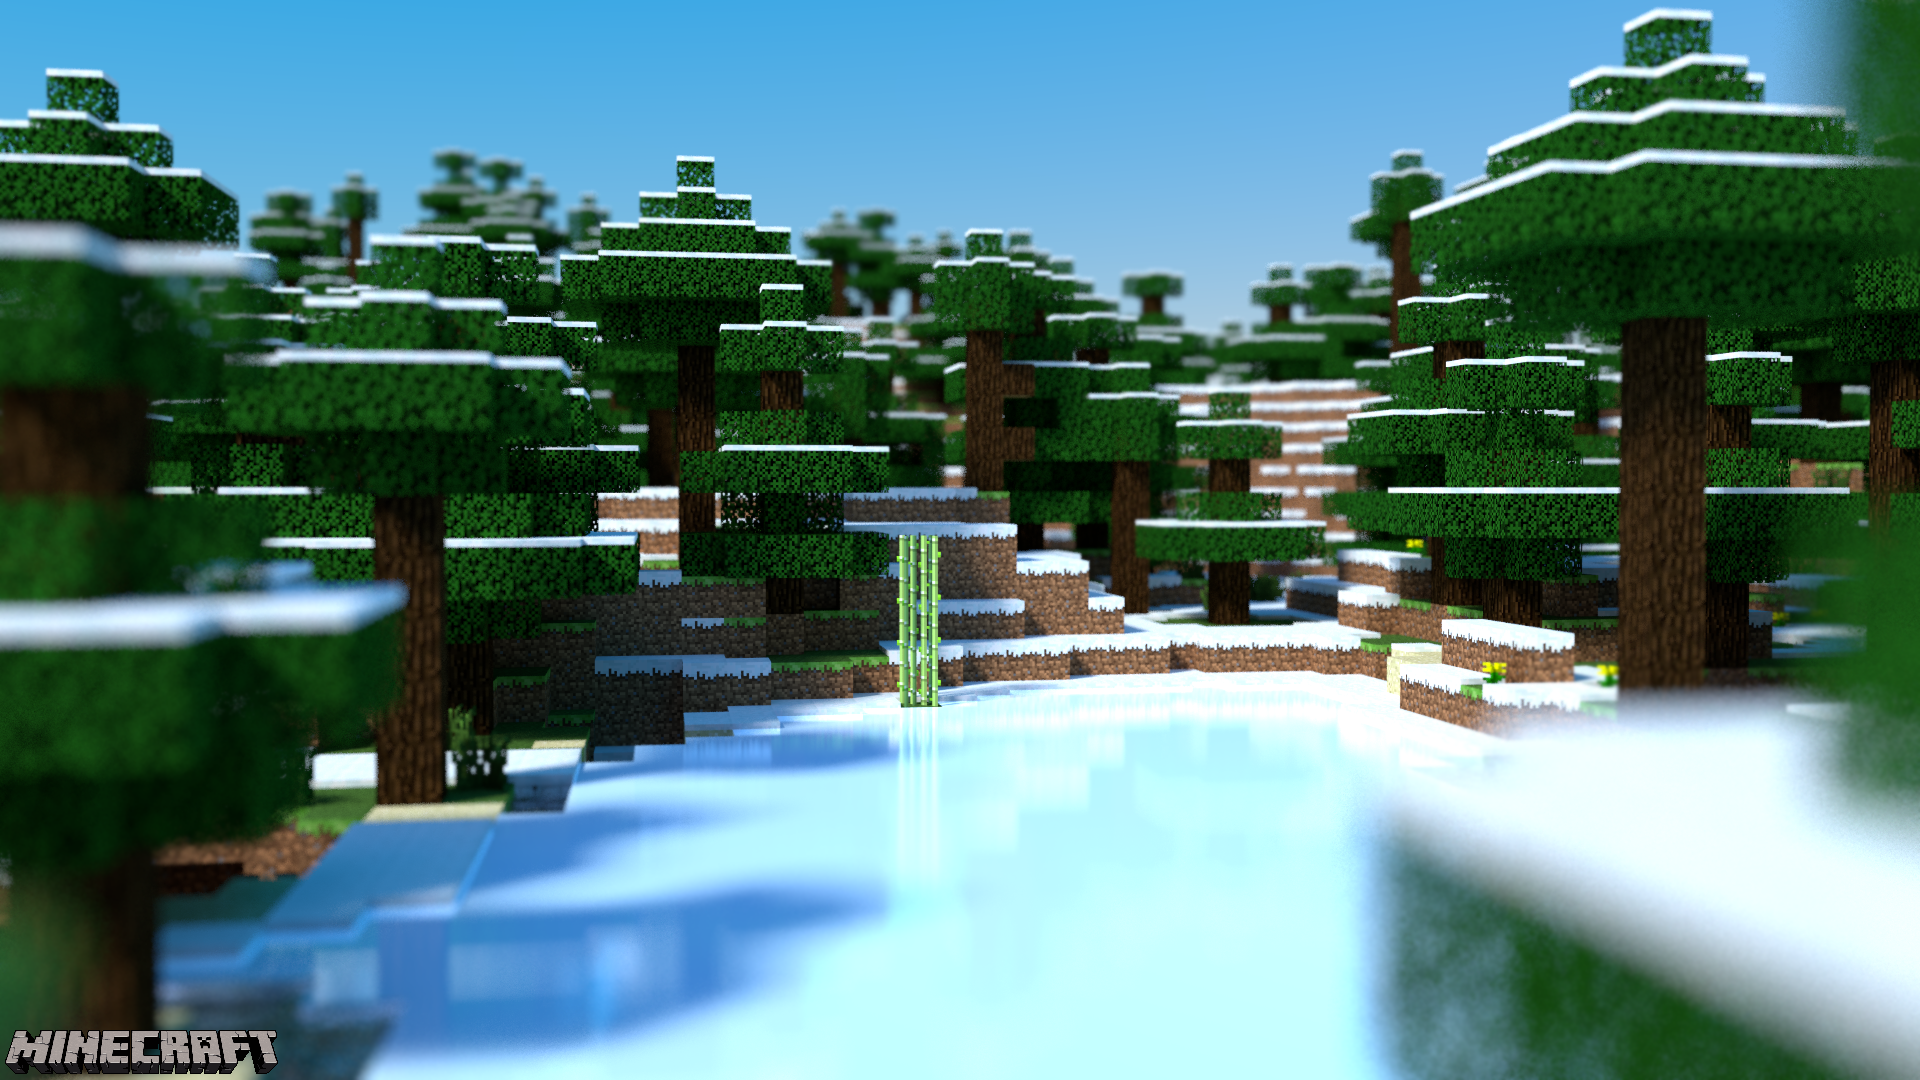 Minecraft Desktop - Frozen Pond by PerpetualStudios on DeviantArt